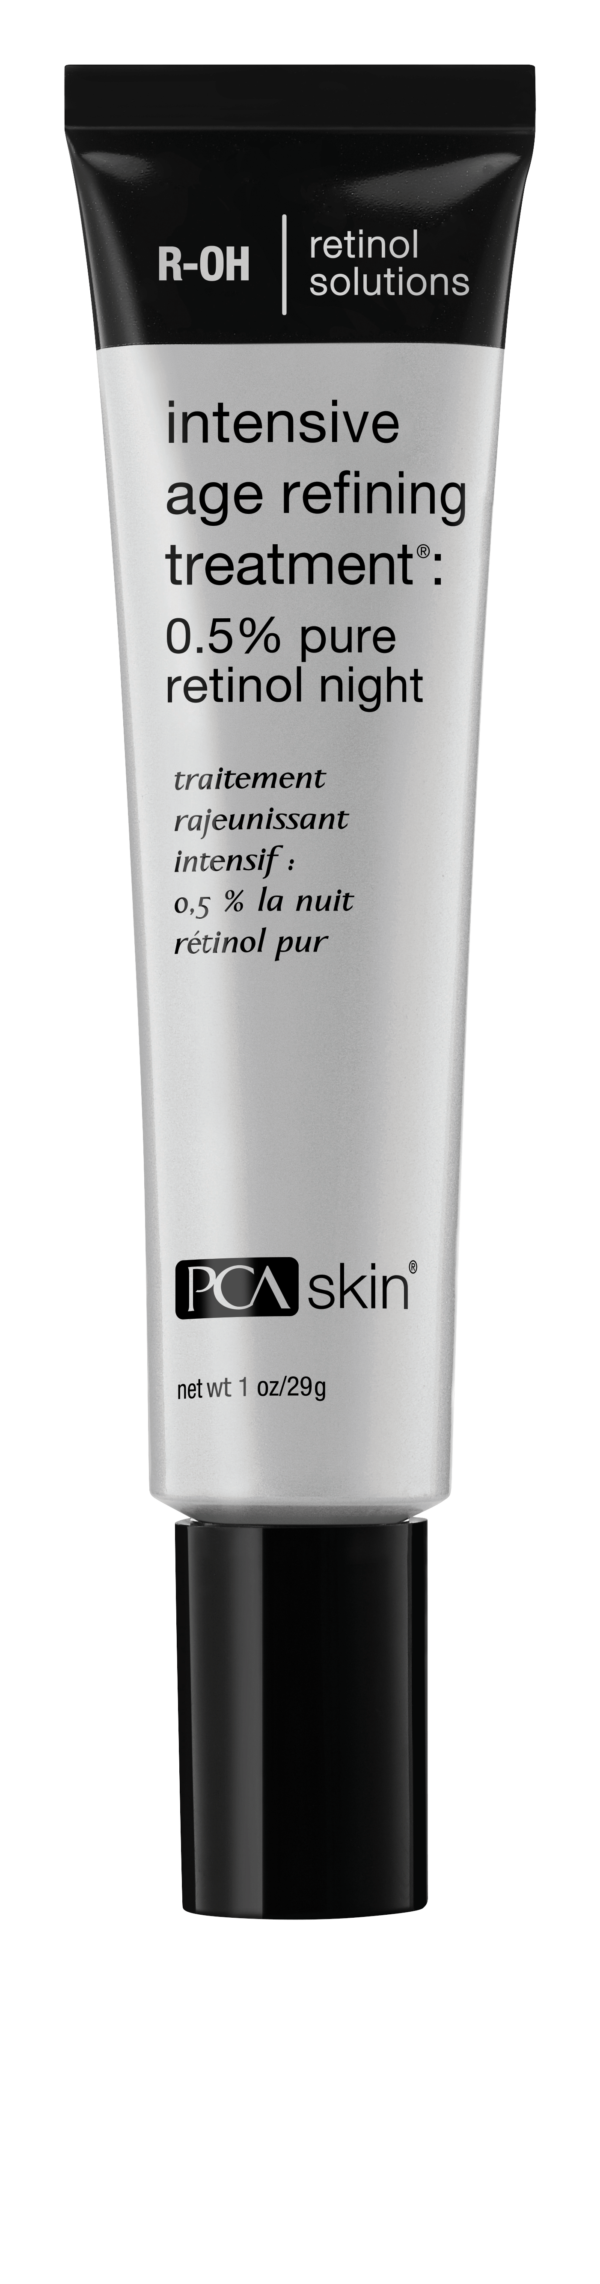 PCA_Skin_Intensive_Age_Refining_Treatment